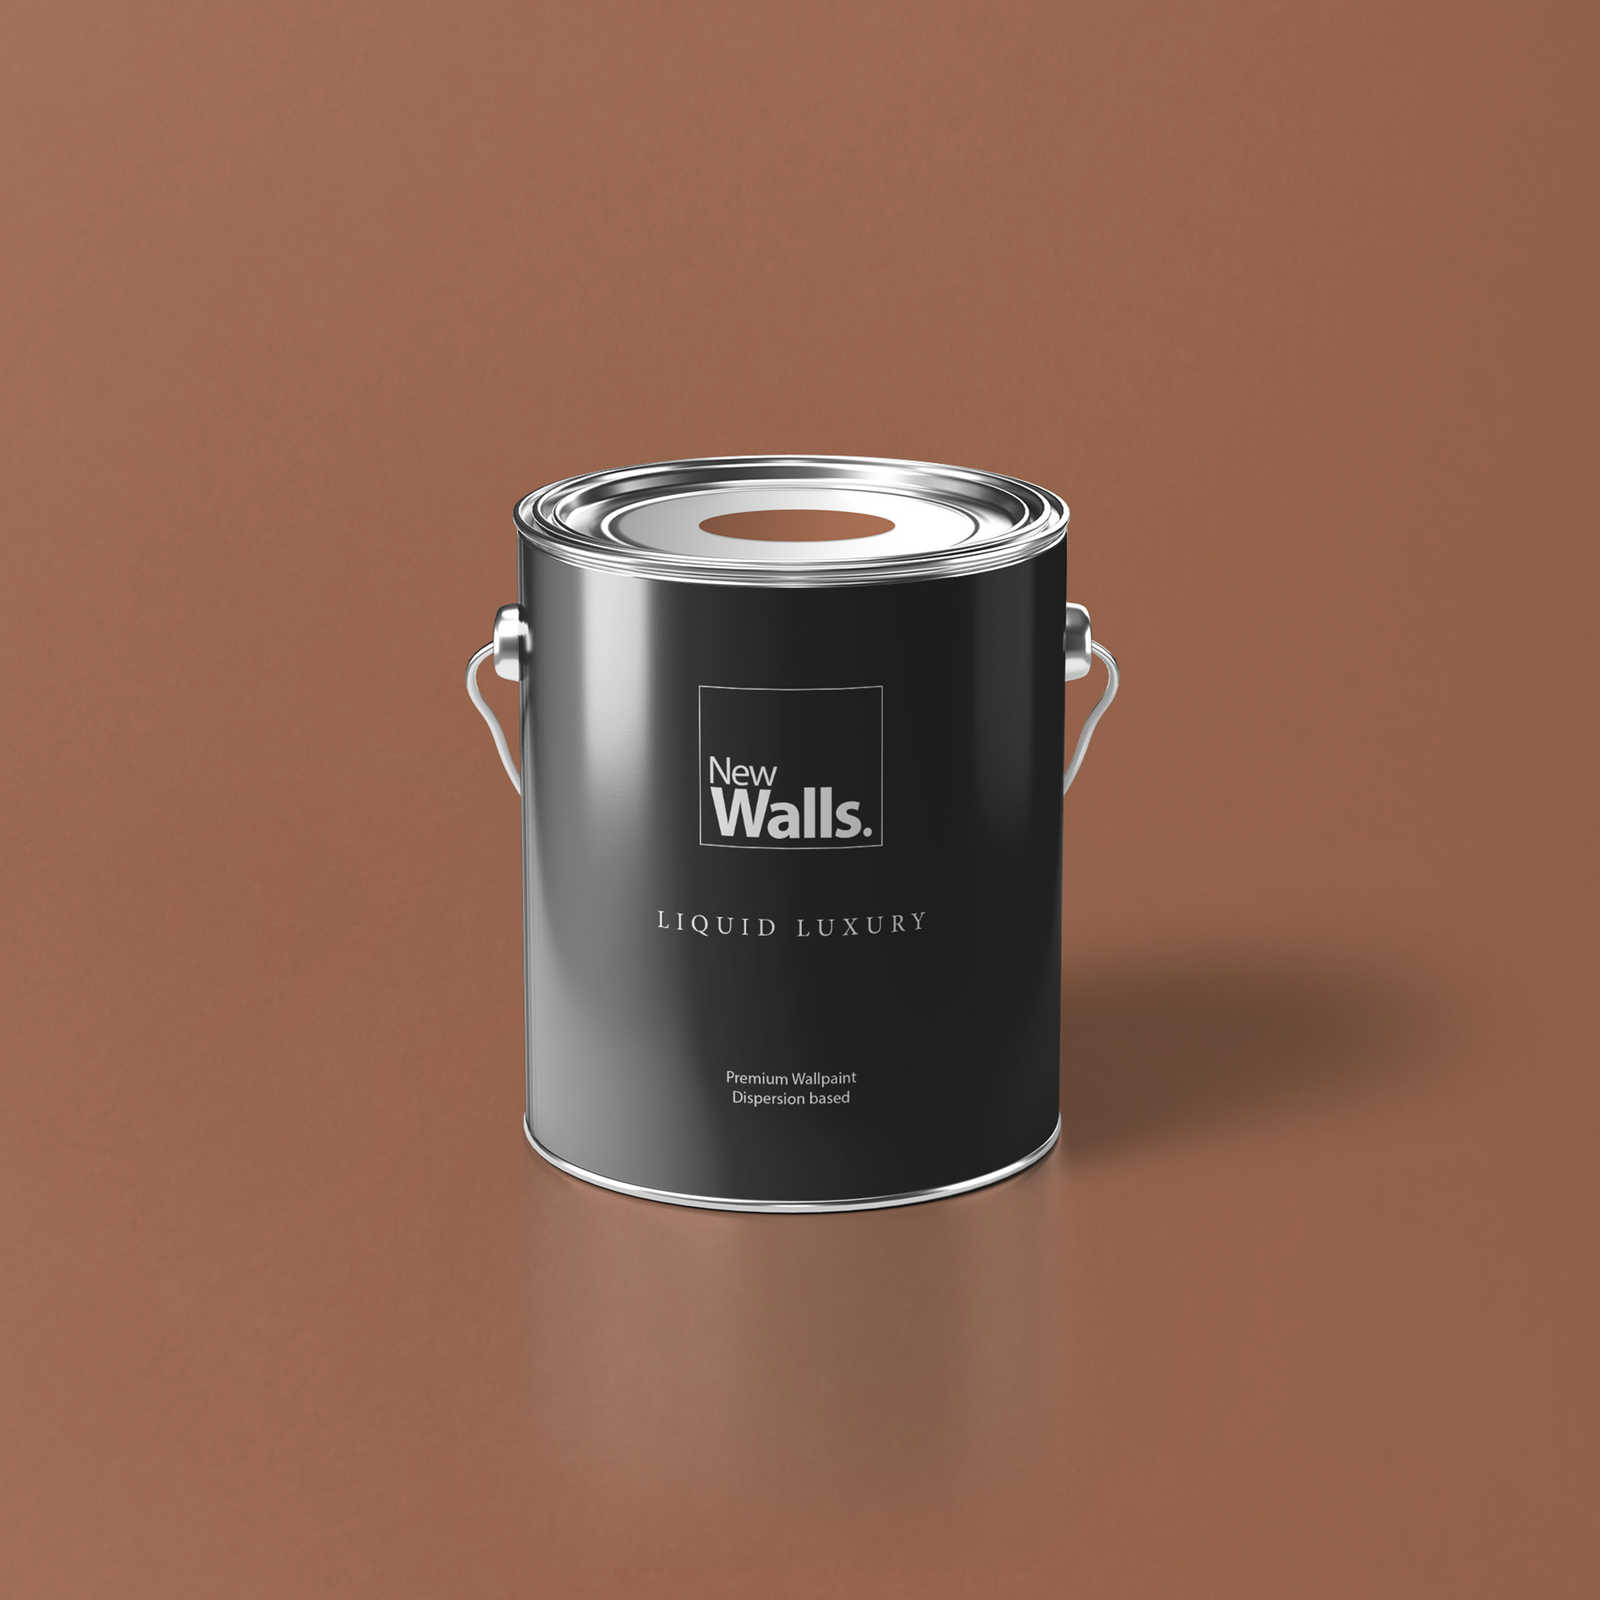 Premium Wall Paint Soothing Terracotta »Pretty Peach« NW909 – 2.5 litre
